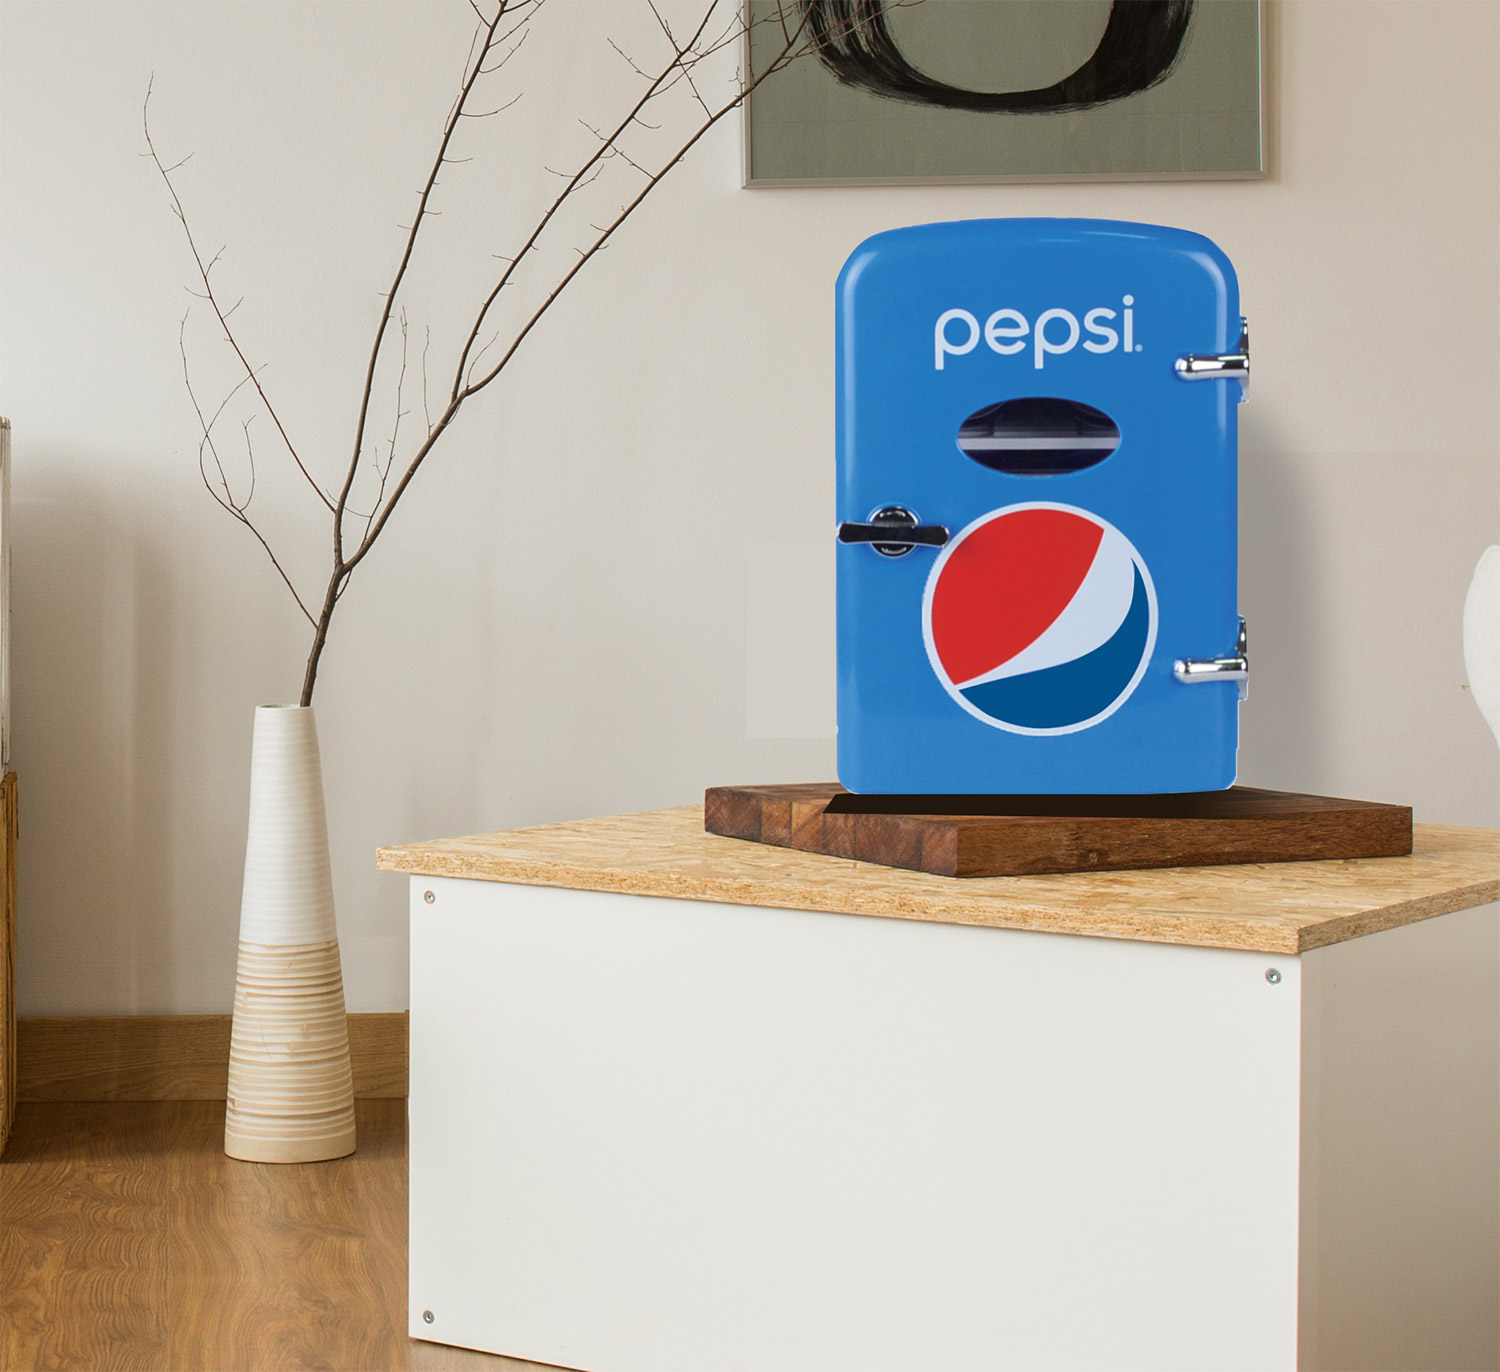 Retro Pepsi Mini Fridge For Your Desk at The Office